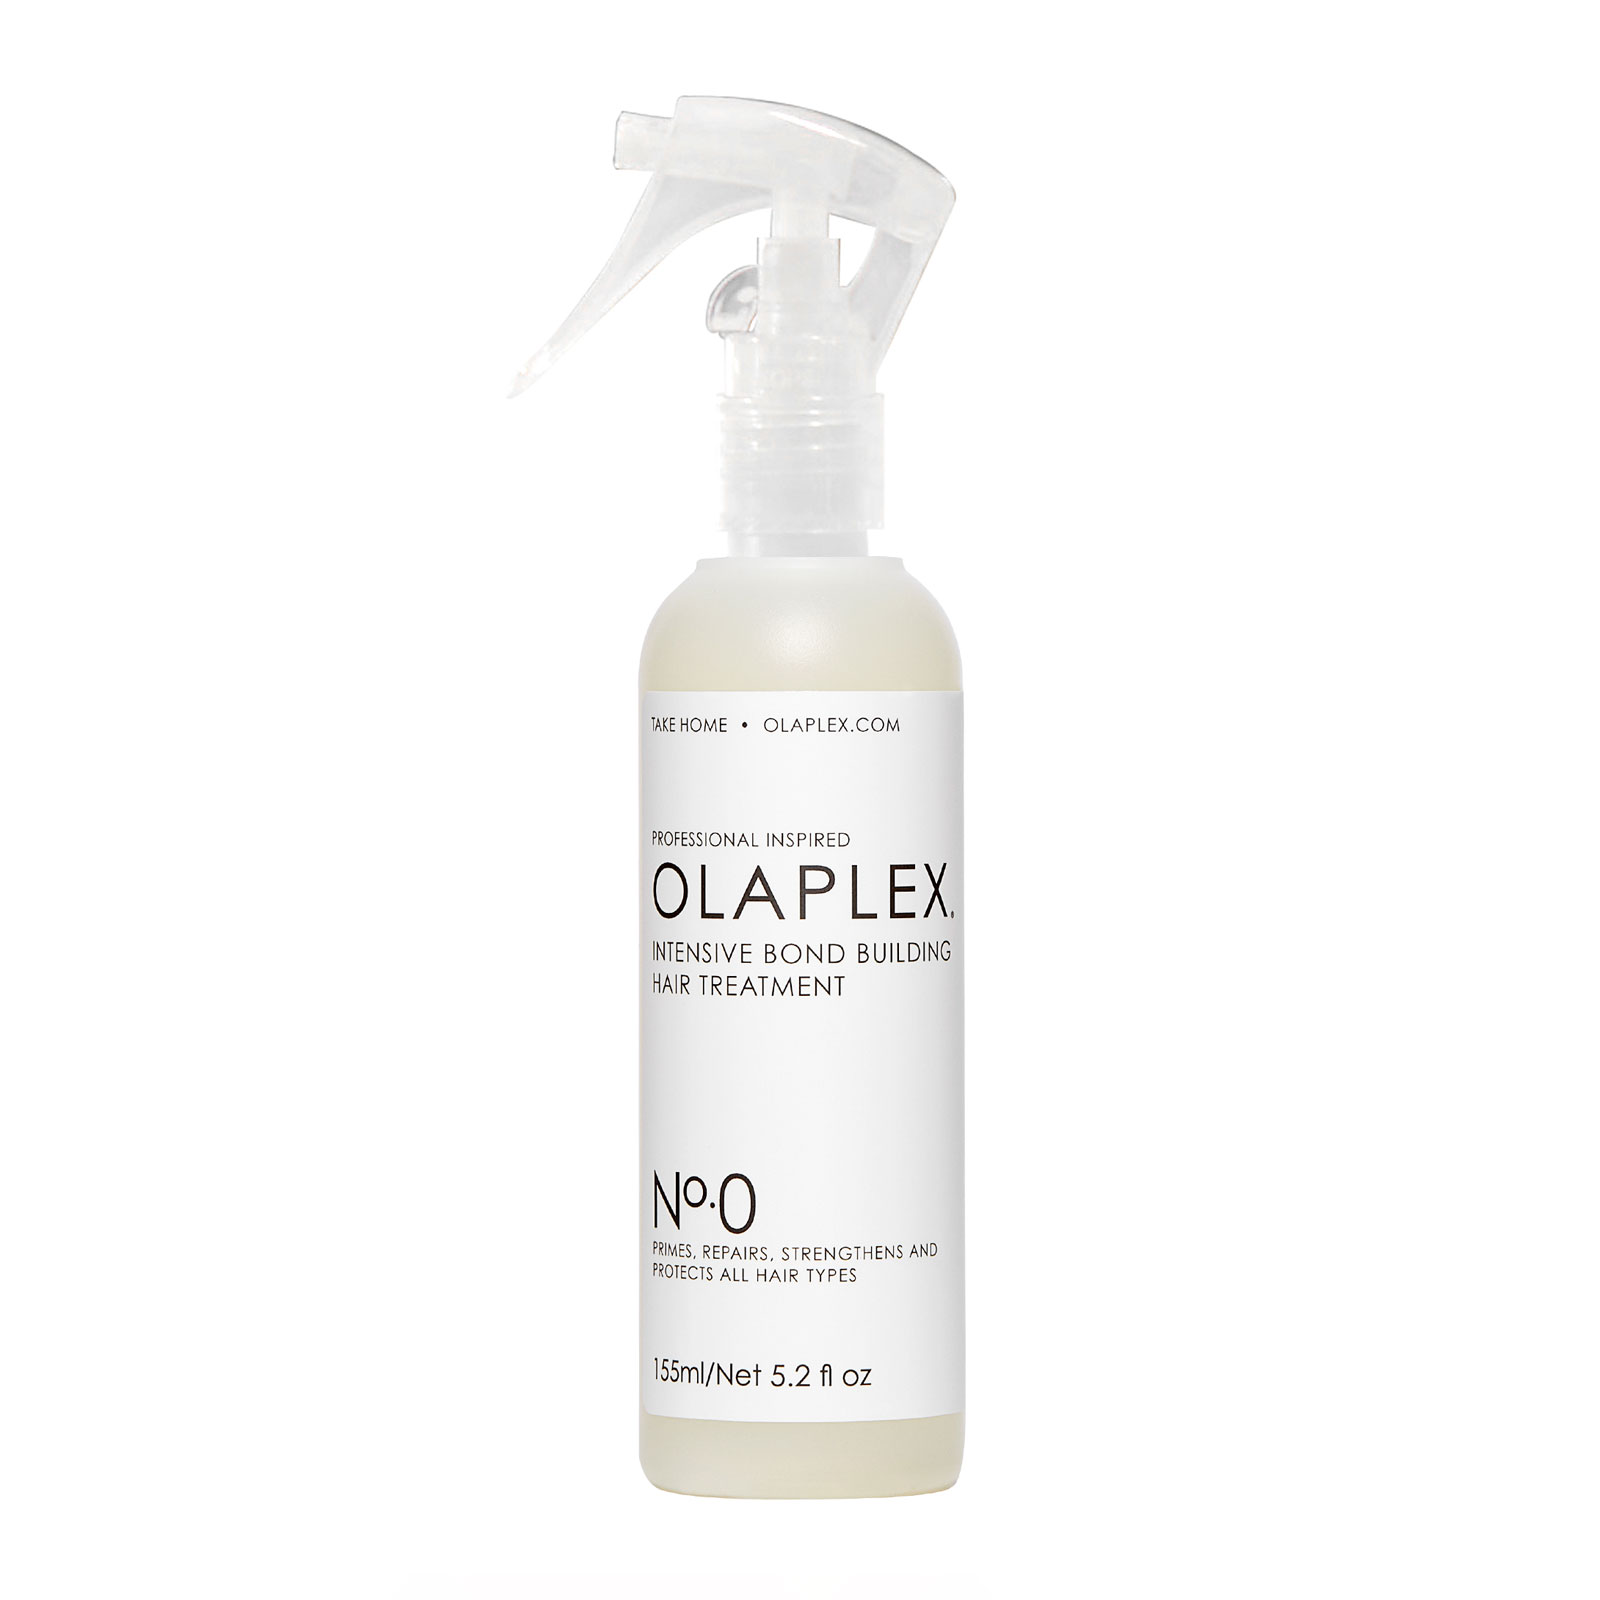 OLAPLEX No. 0 Intensive Bond Building Hair treatment